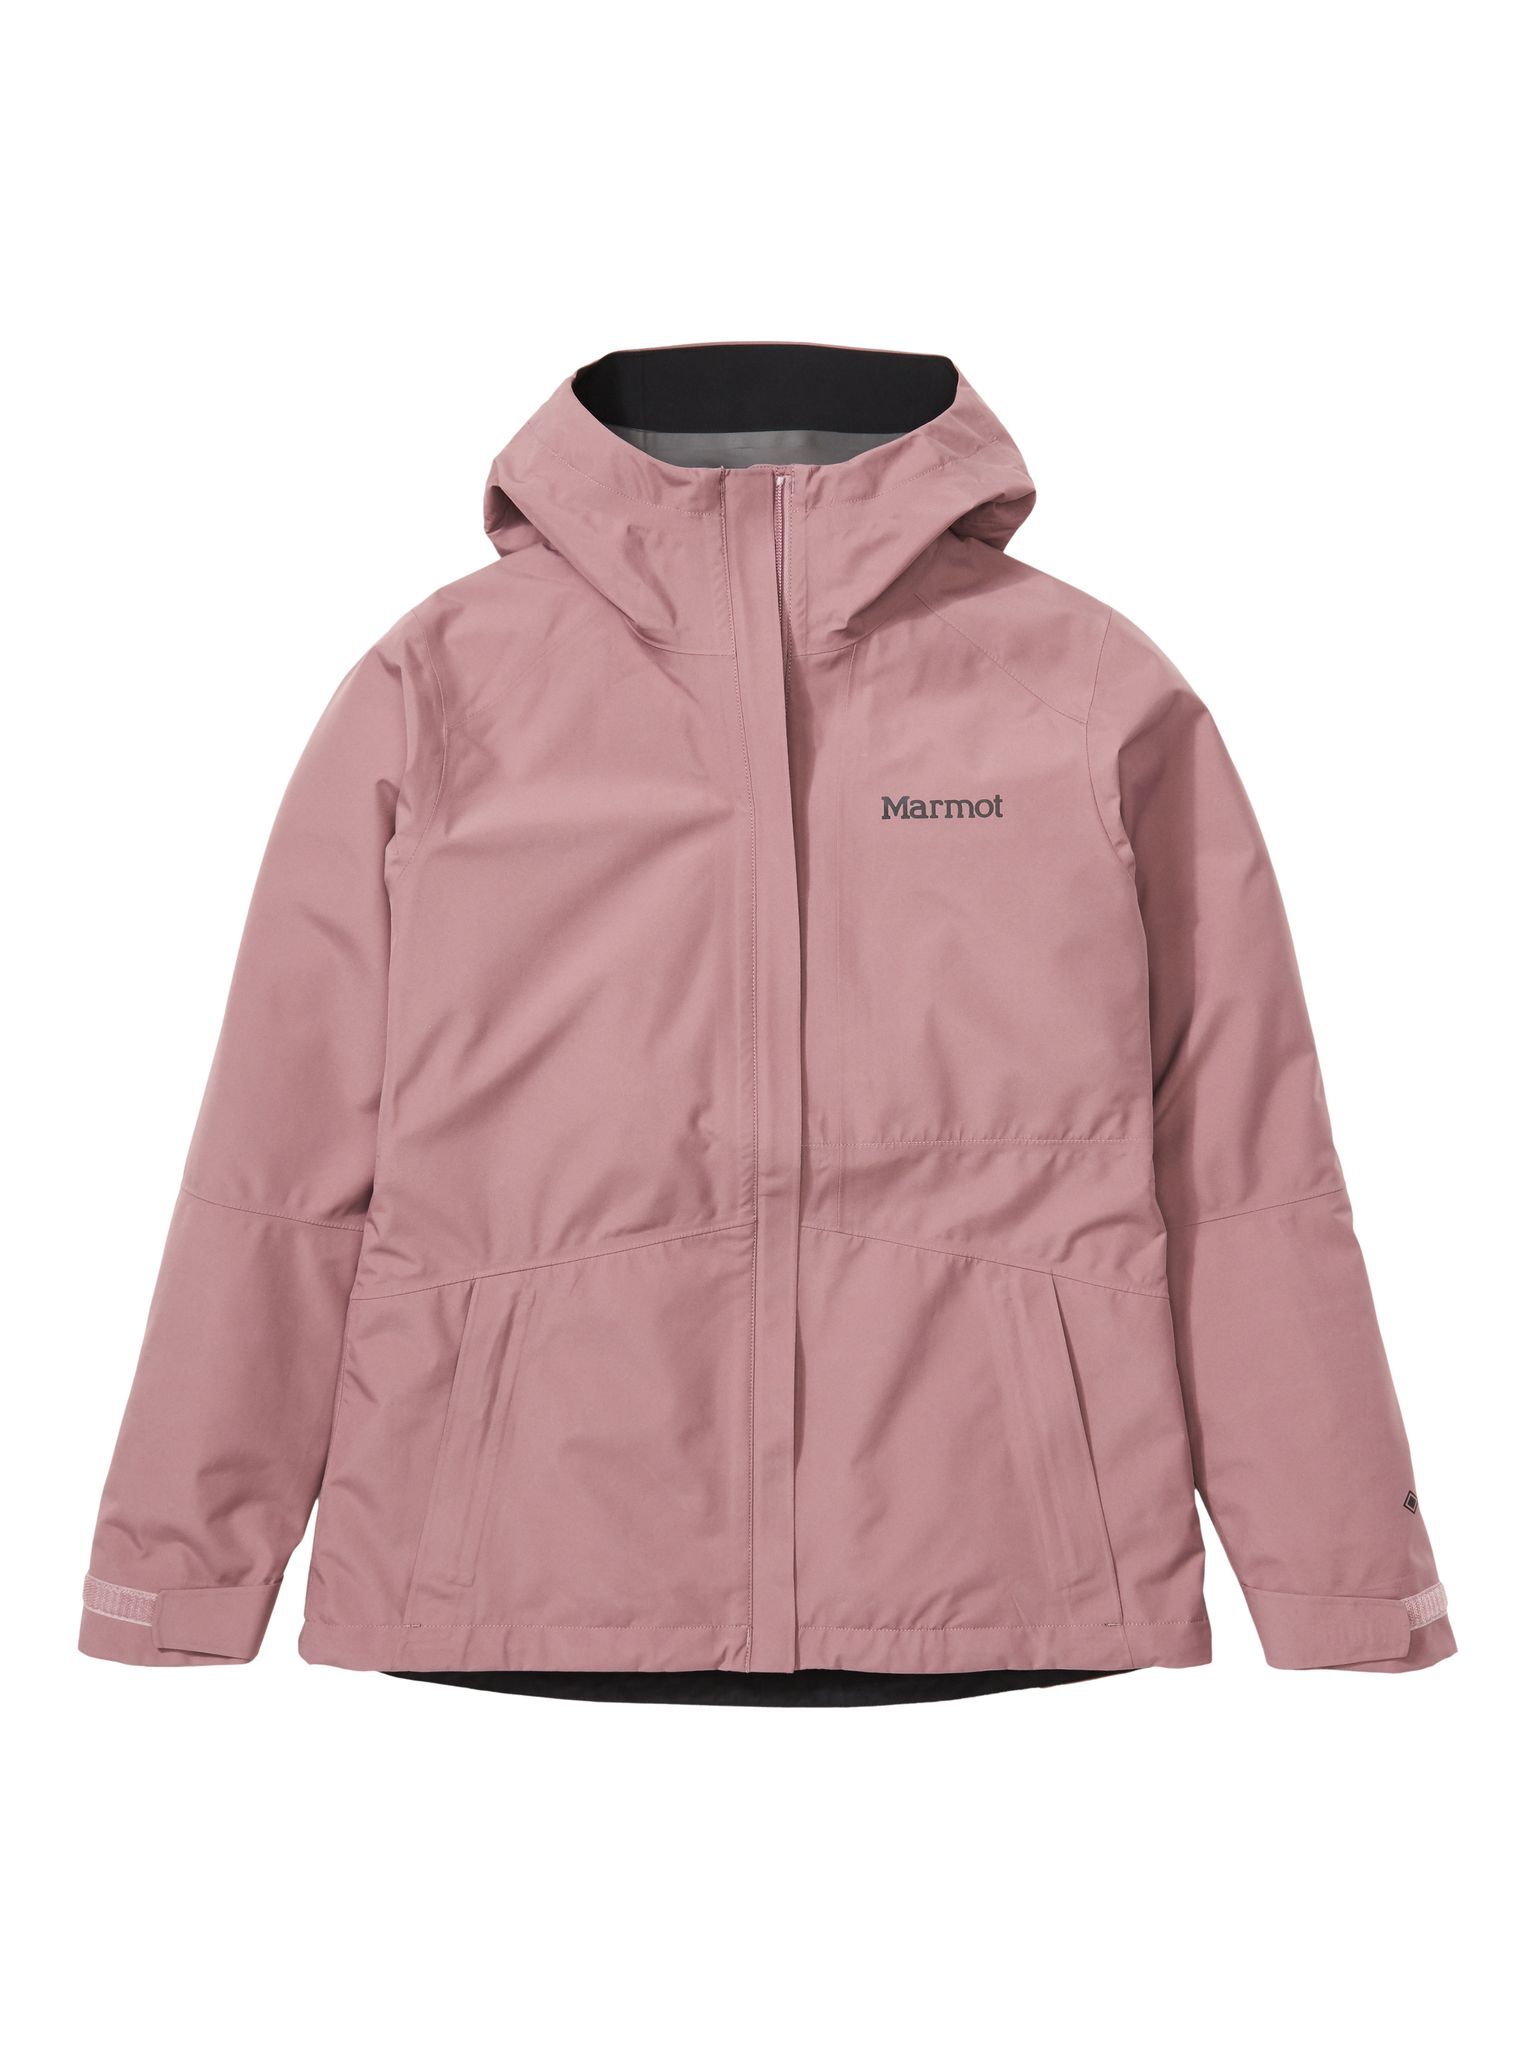 Marmot Minimalist Jacket - Hardshell jacket - Women's